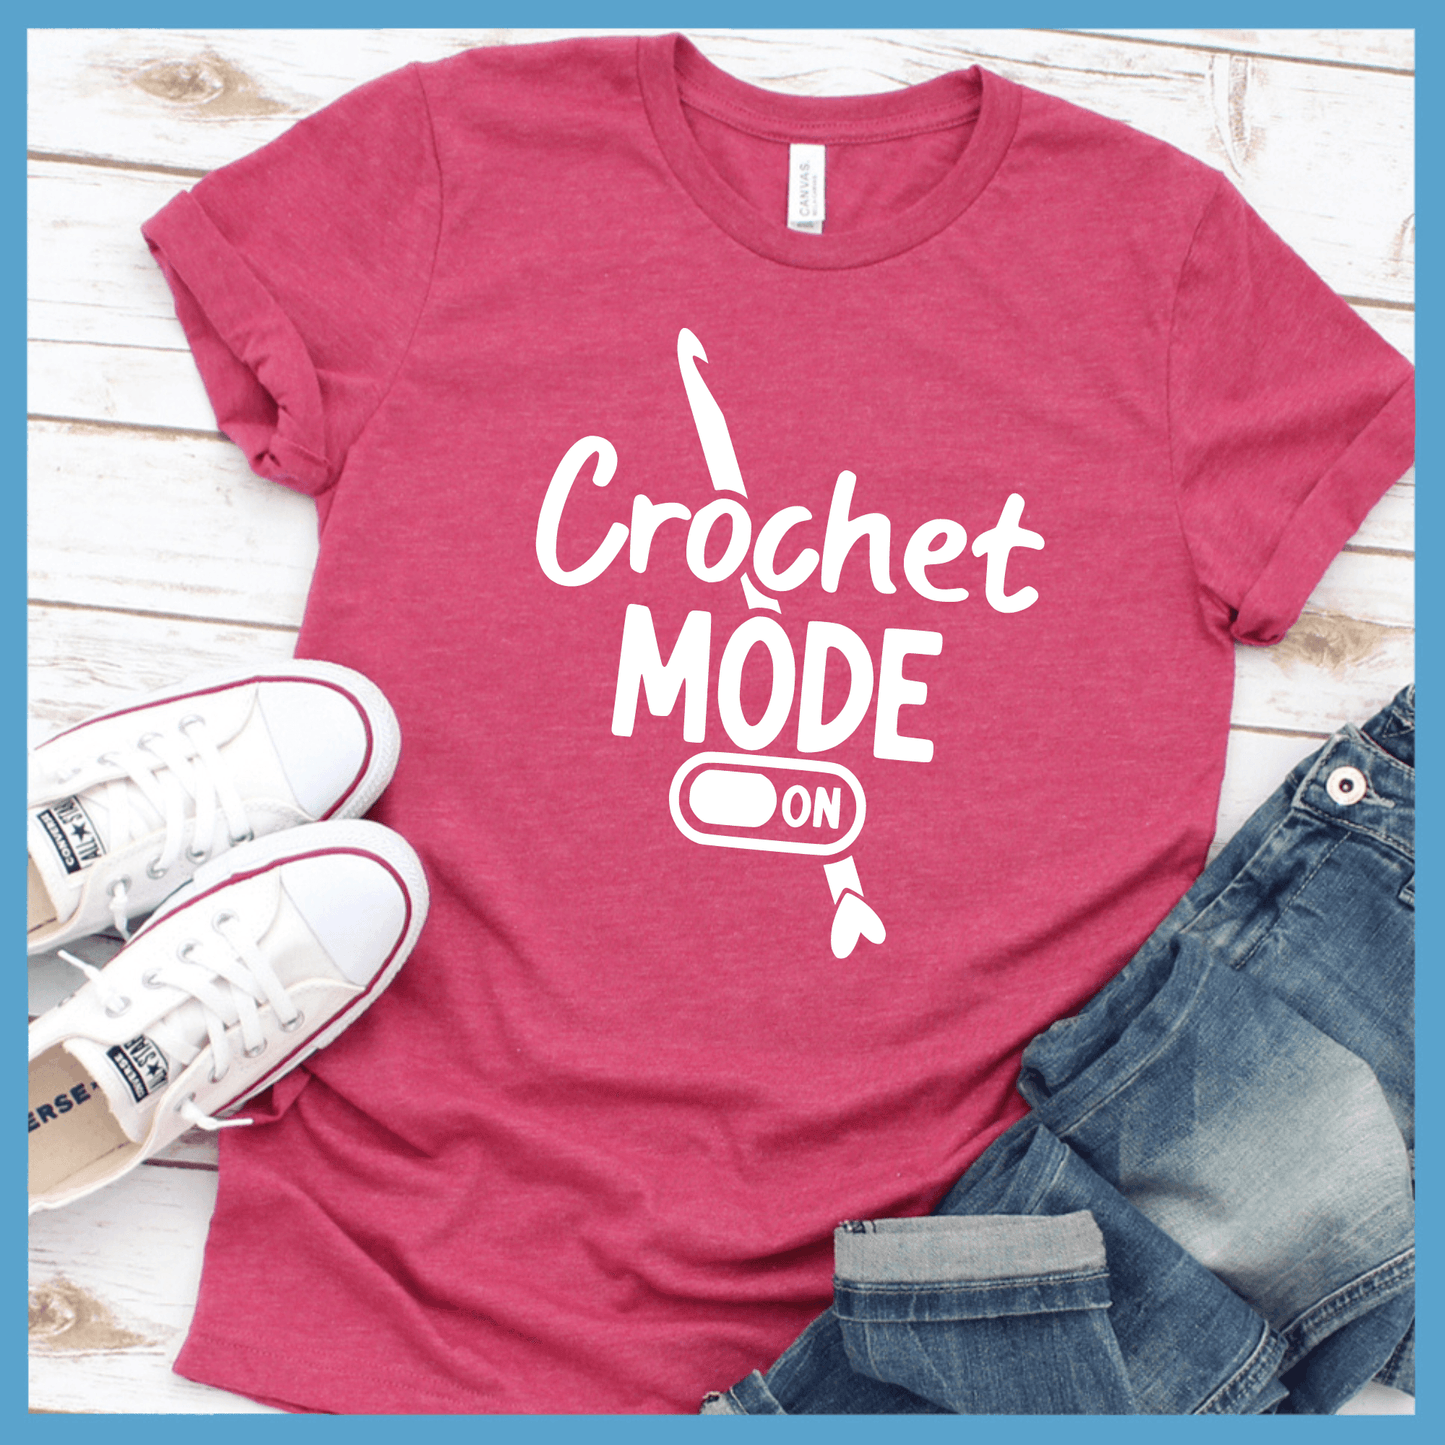 Crochet Mode ON T-Shirt Heather Raspberry - Crochet Mode ON T-Shirt with playful lettering for crafting enthusiasts.